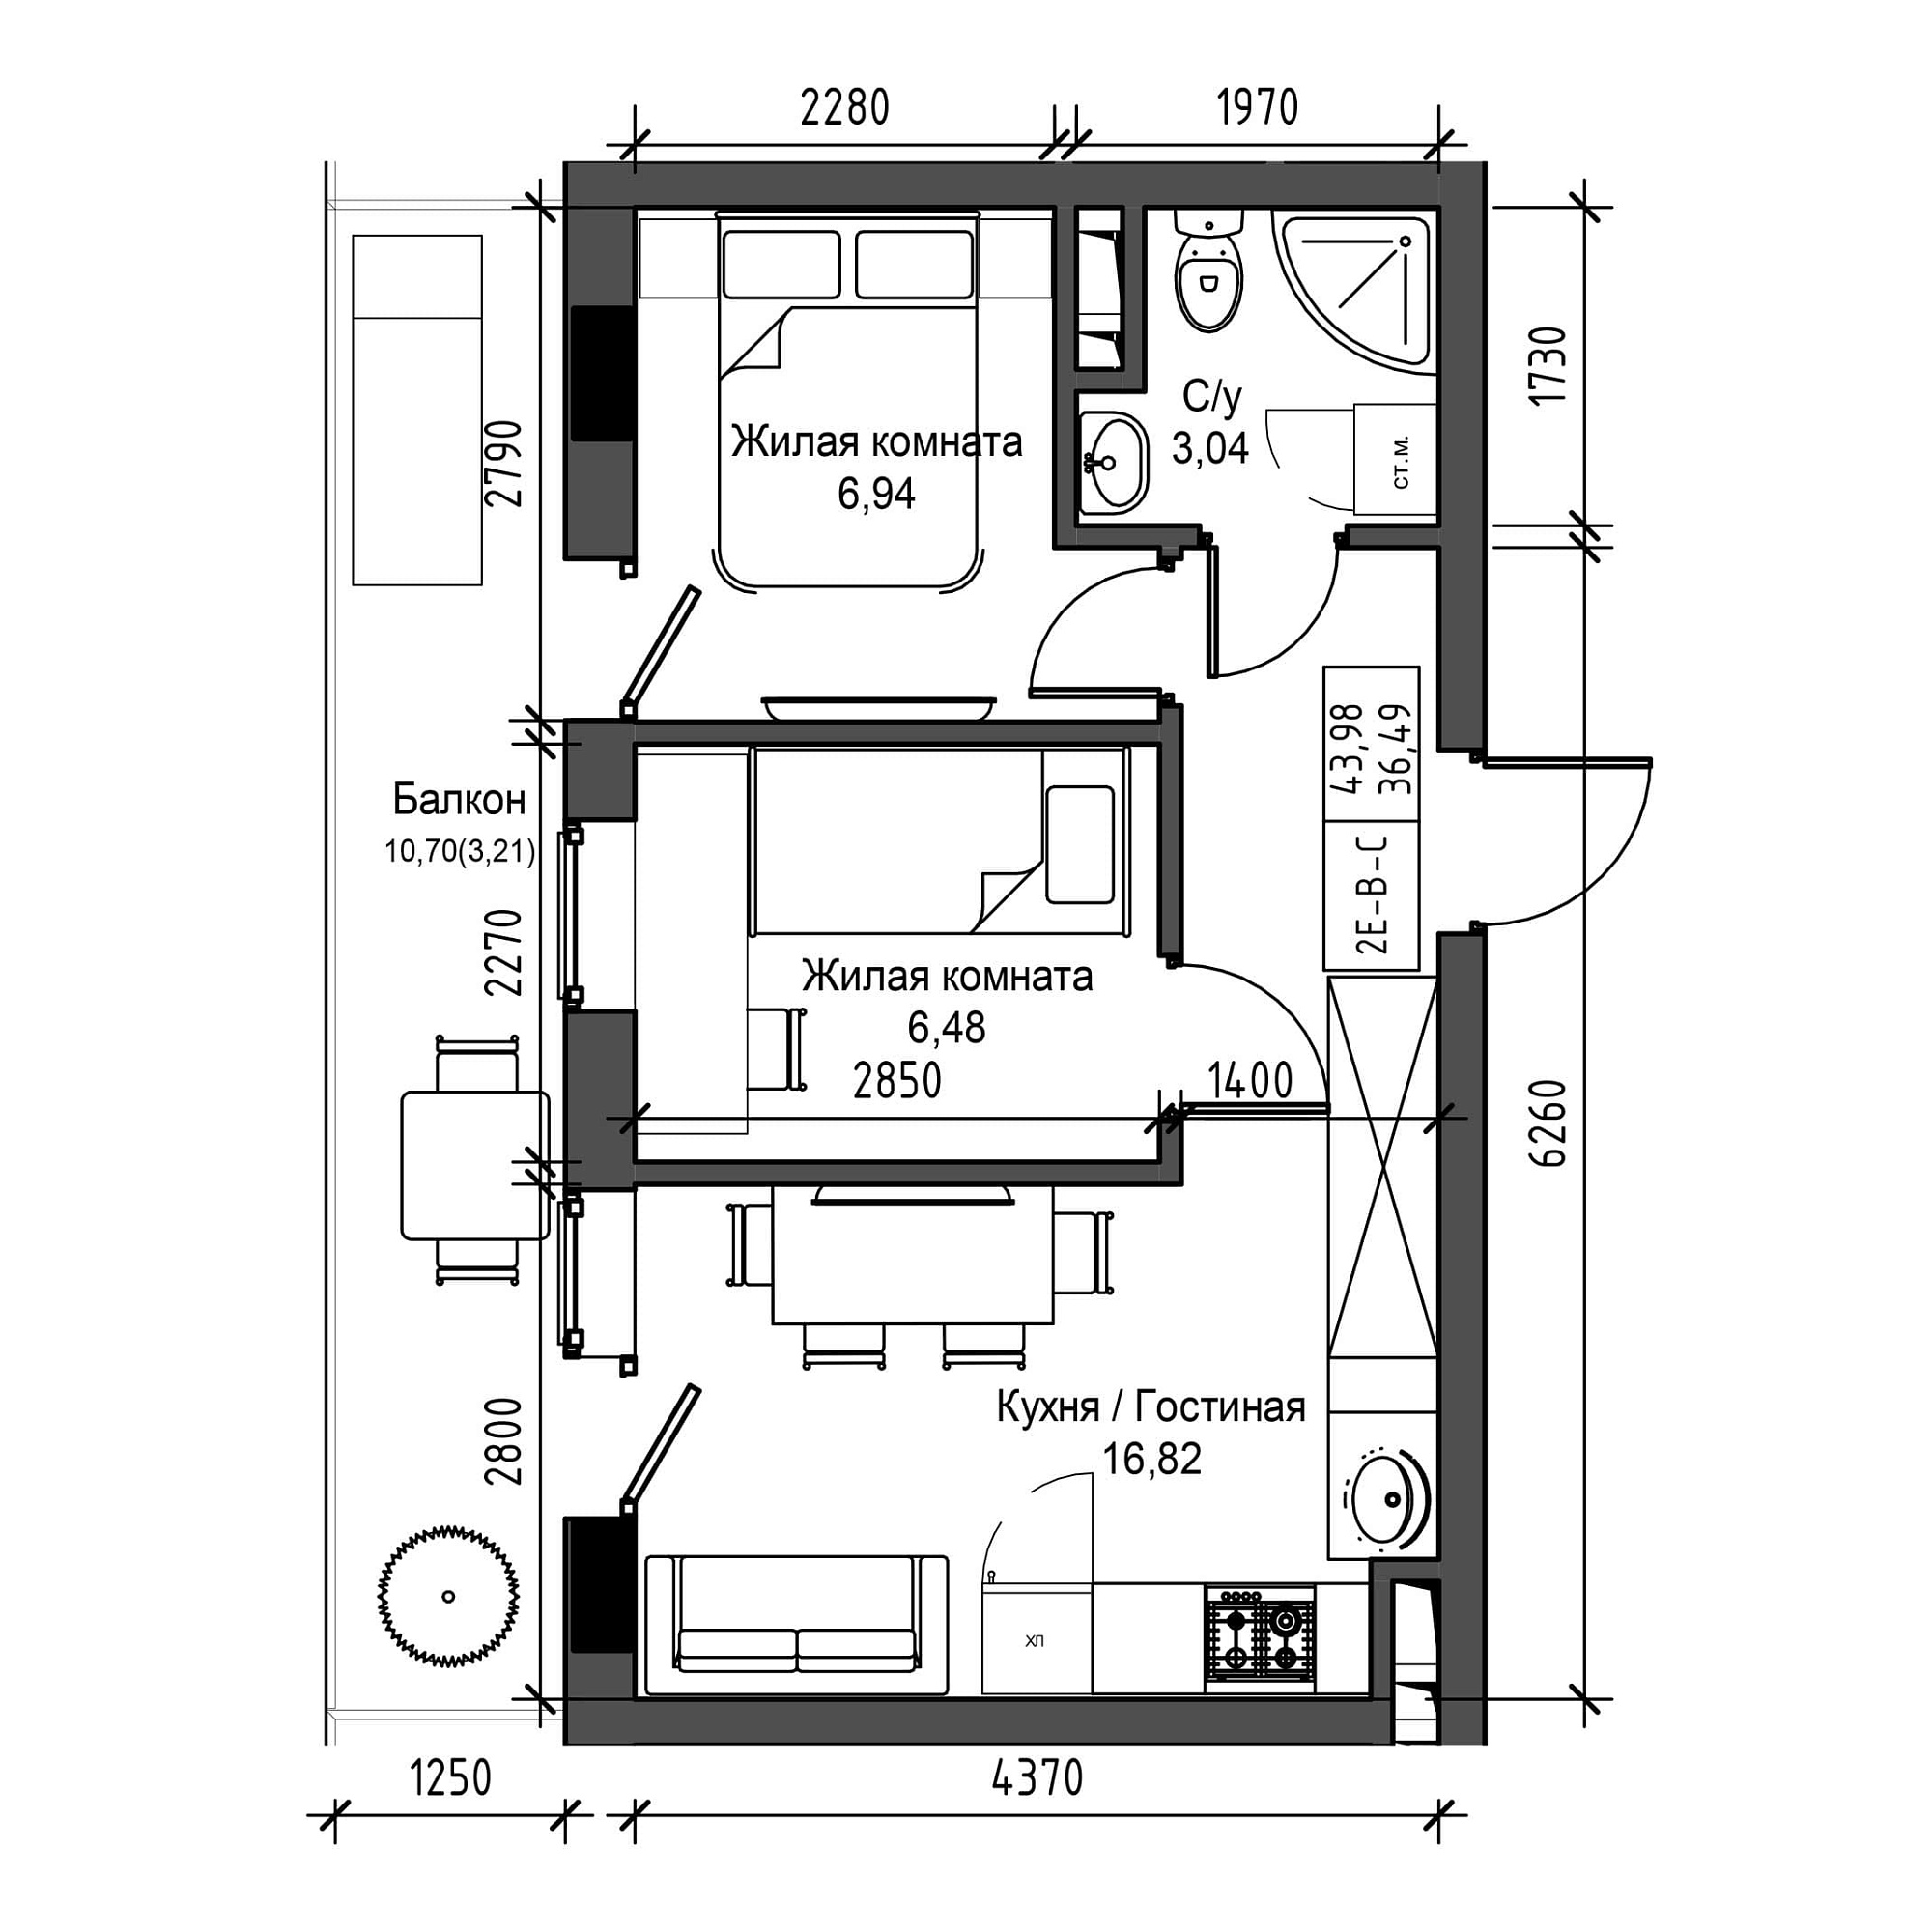 Planning 2-rm flats area 36.49m2, UM-001-07/0017.